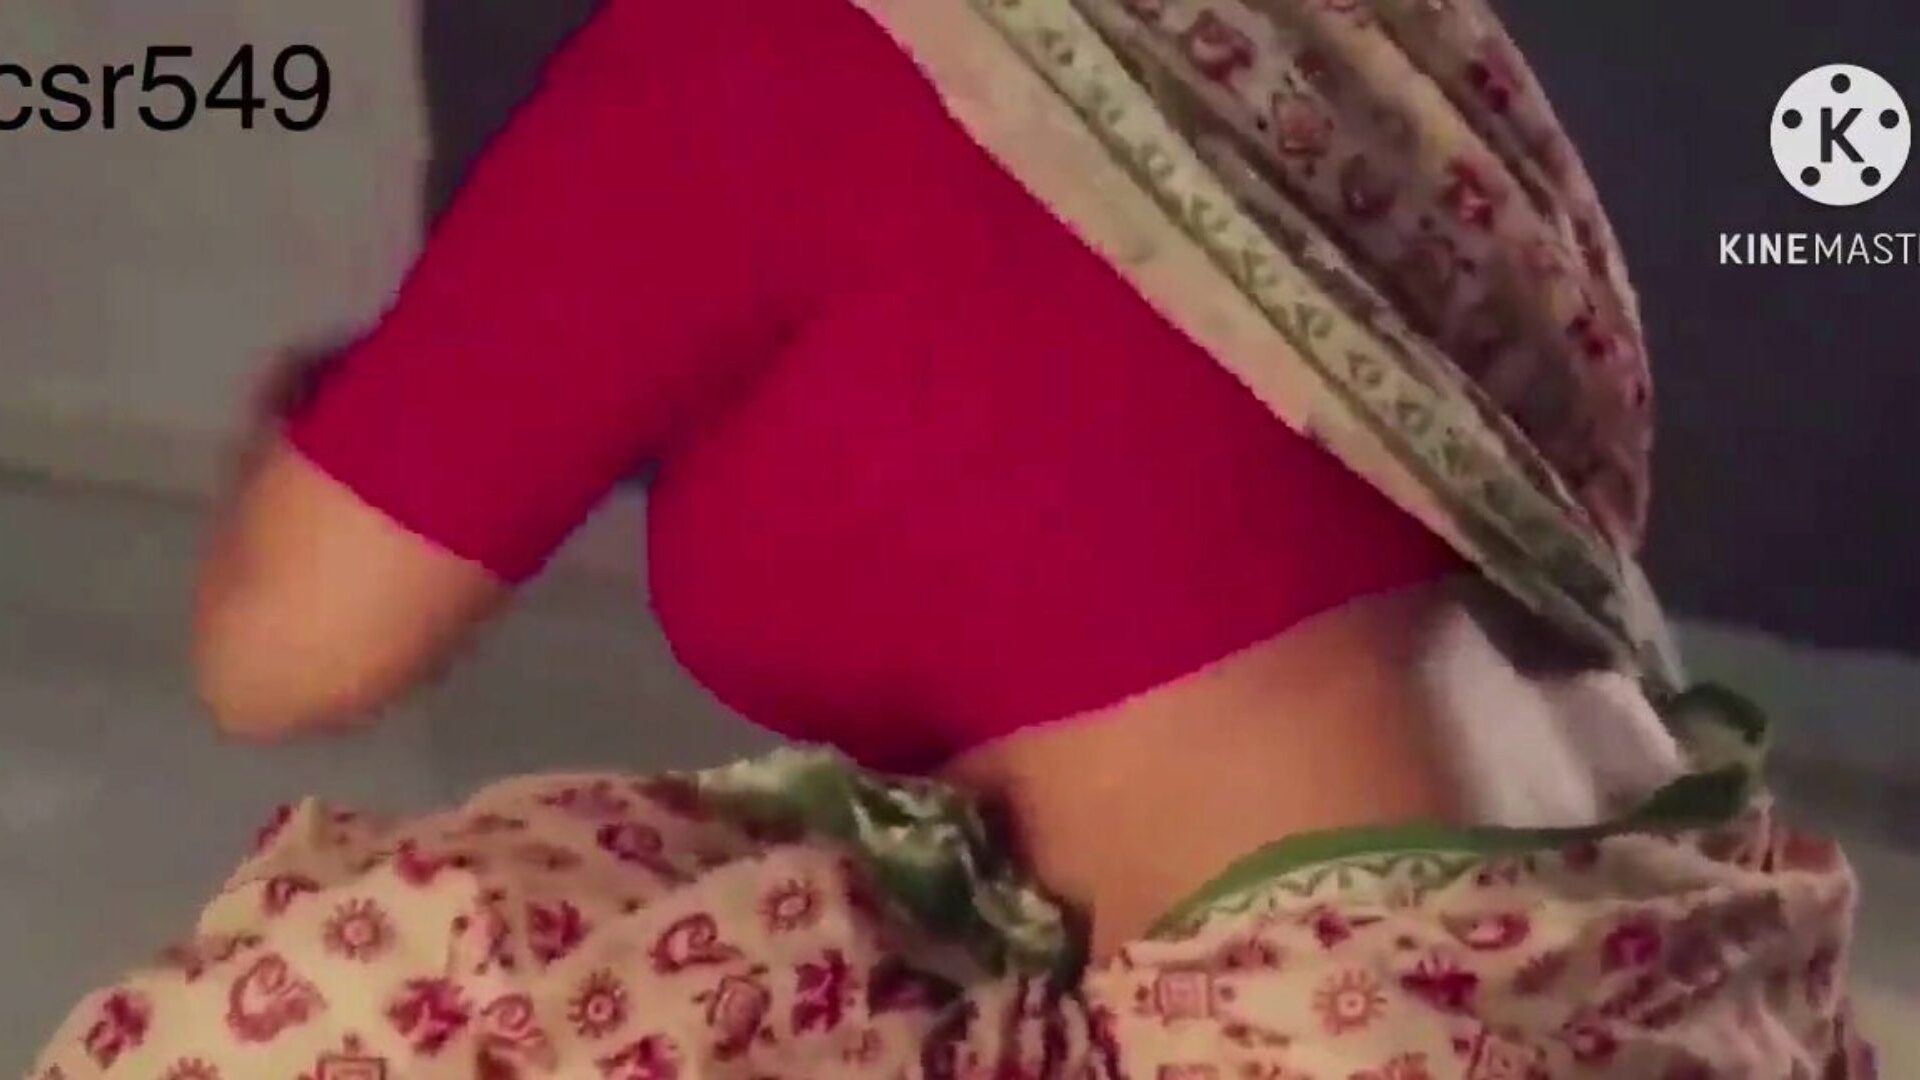 desi סקסי n saree אדום אדום נשים מקבל מזוין על ידי ... צפה desi אישה סקסית ועסיסי ב saree אדום מקבל דפוק על ידי משרת סרט על xhamster